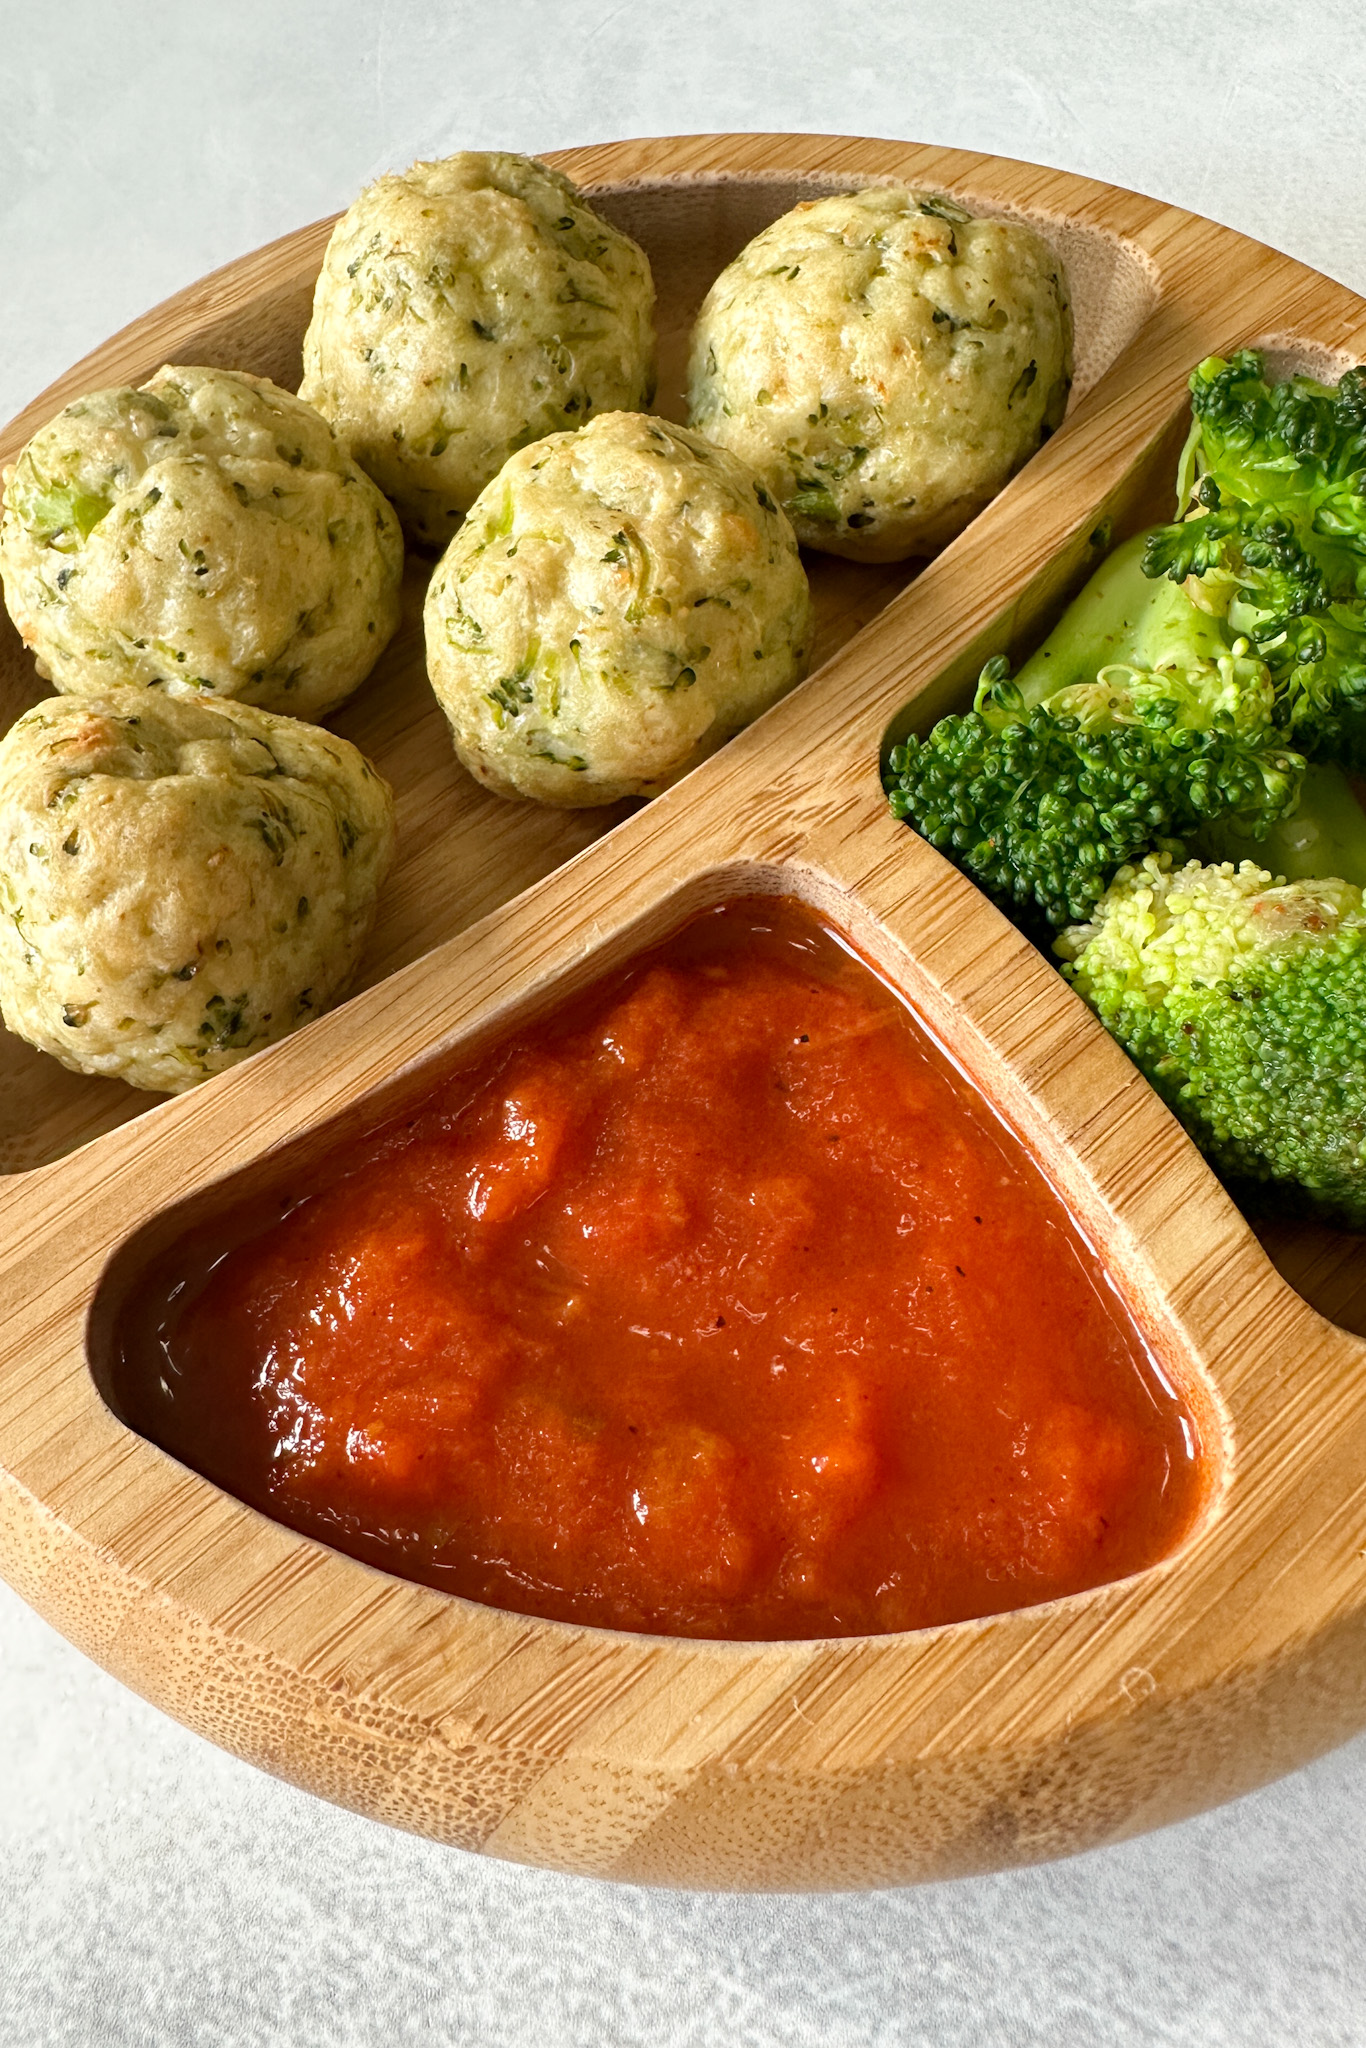 Chicken and broccoli meatballs served with marinara sauce.